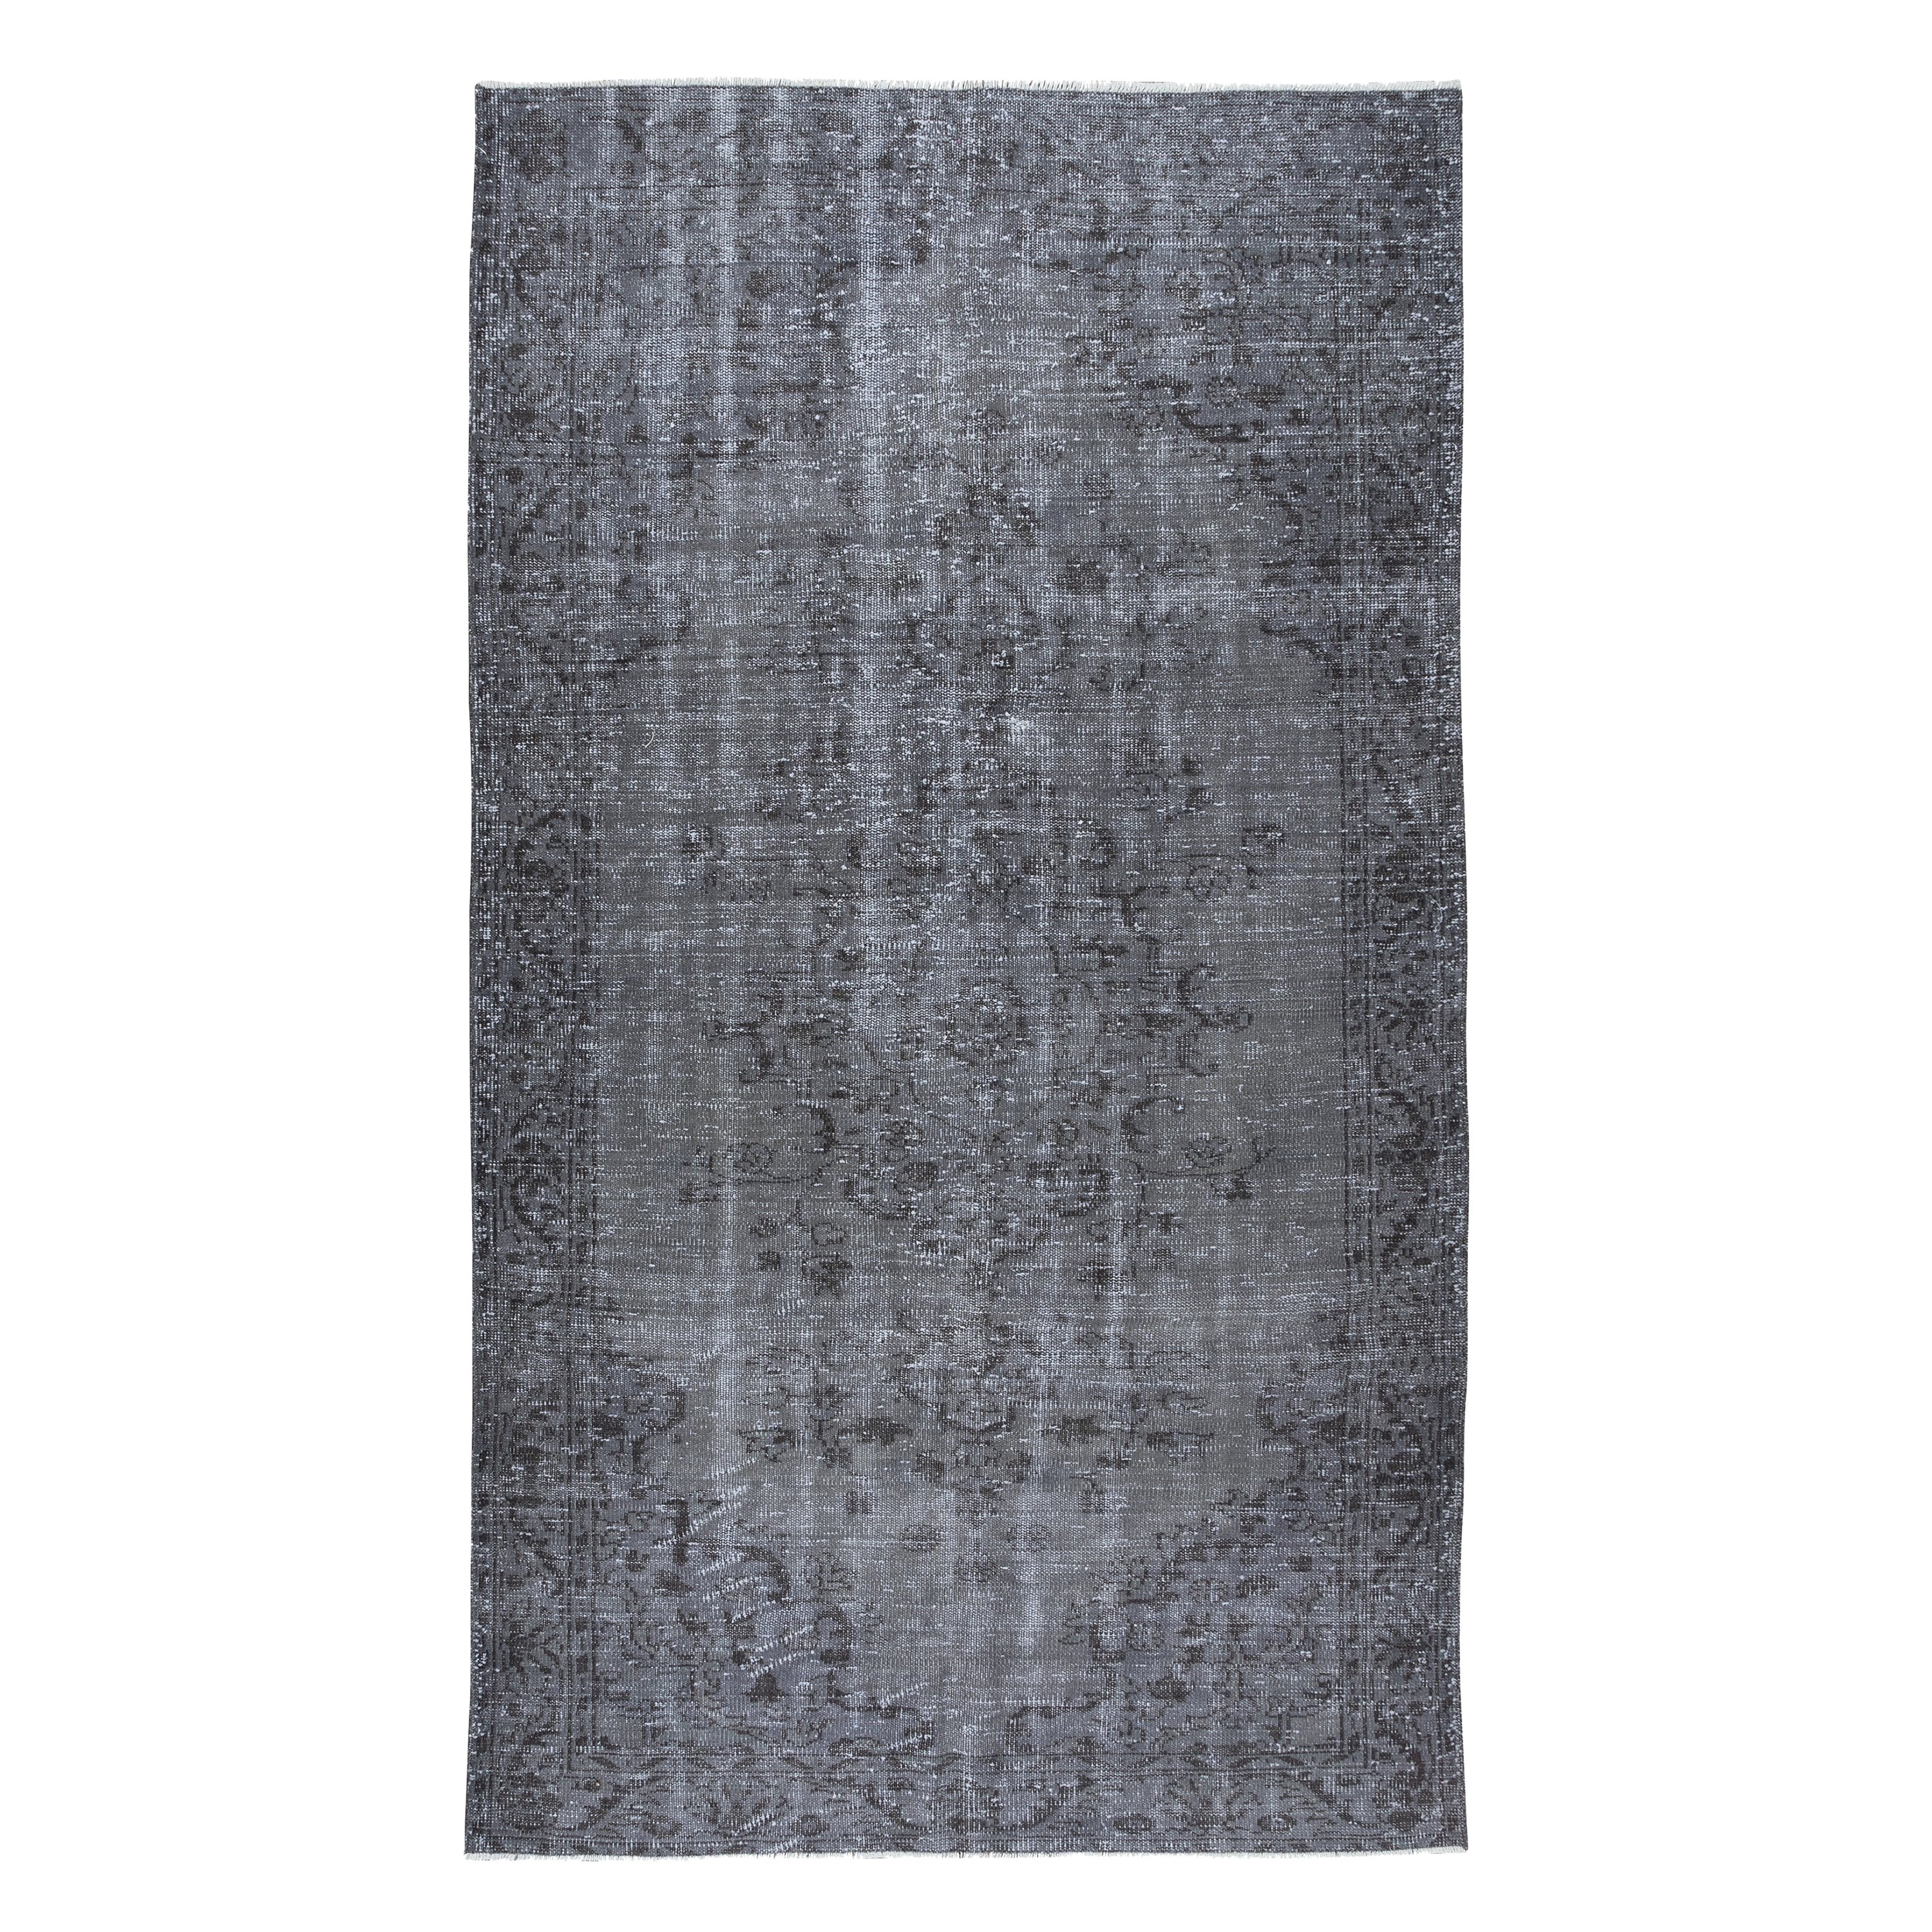 5.5x9 Ft Distressed Modern Handmade Gray Area Rug, Turkish Wool Carpet